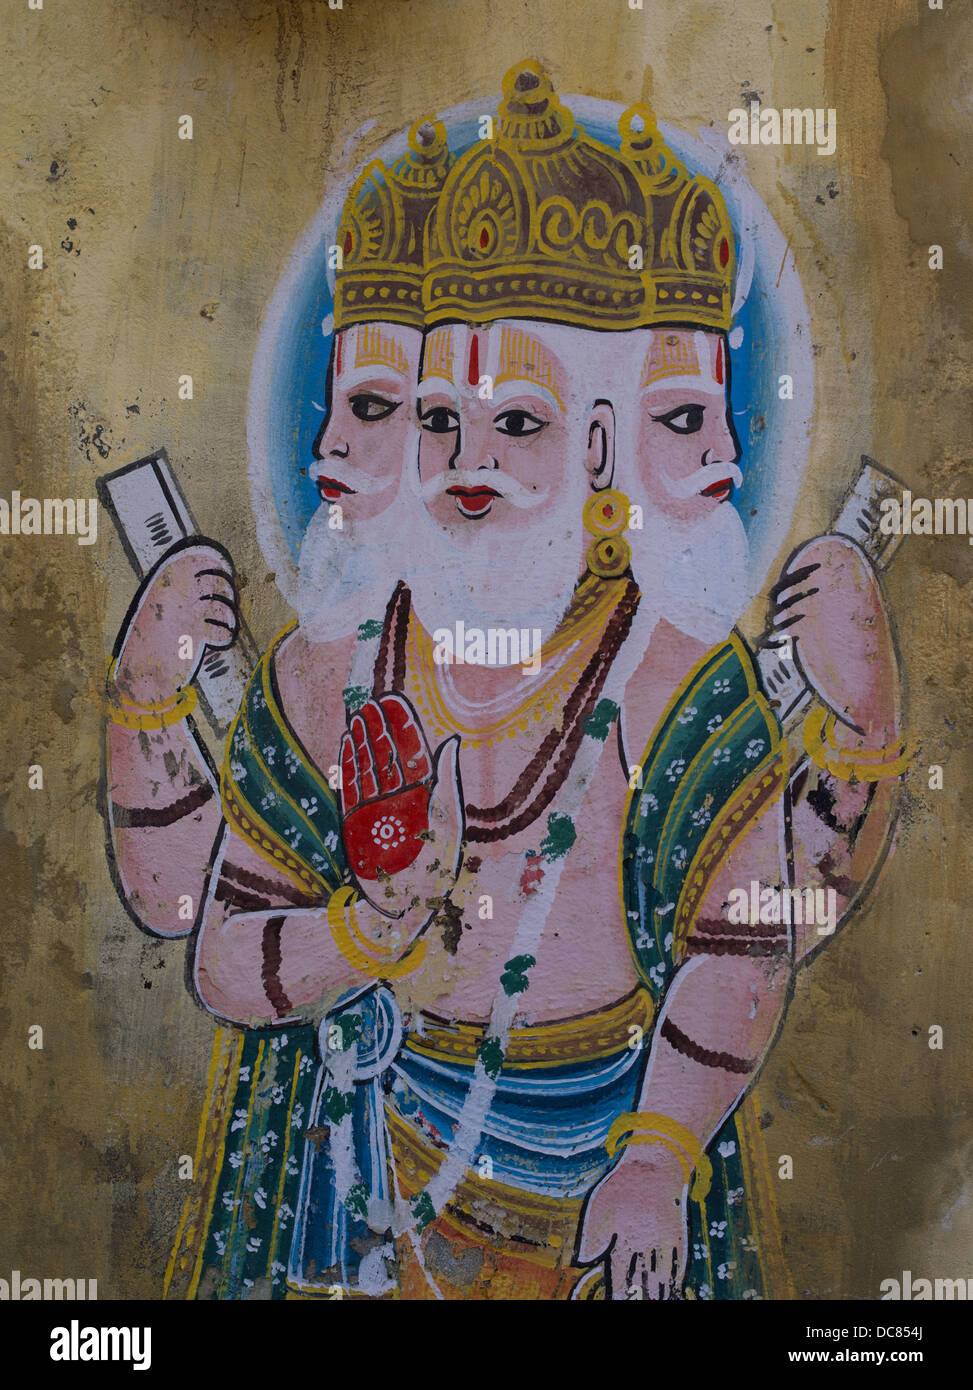 Hindu god Brahma, Painted mural on the buildings located on the banks of the Ganges River - Varanasi, Uttar Pradesh, India Stock Photo